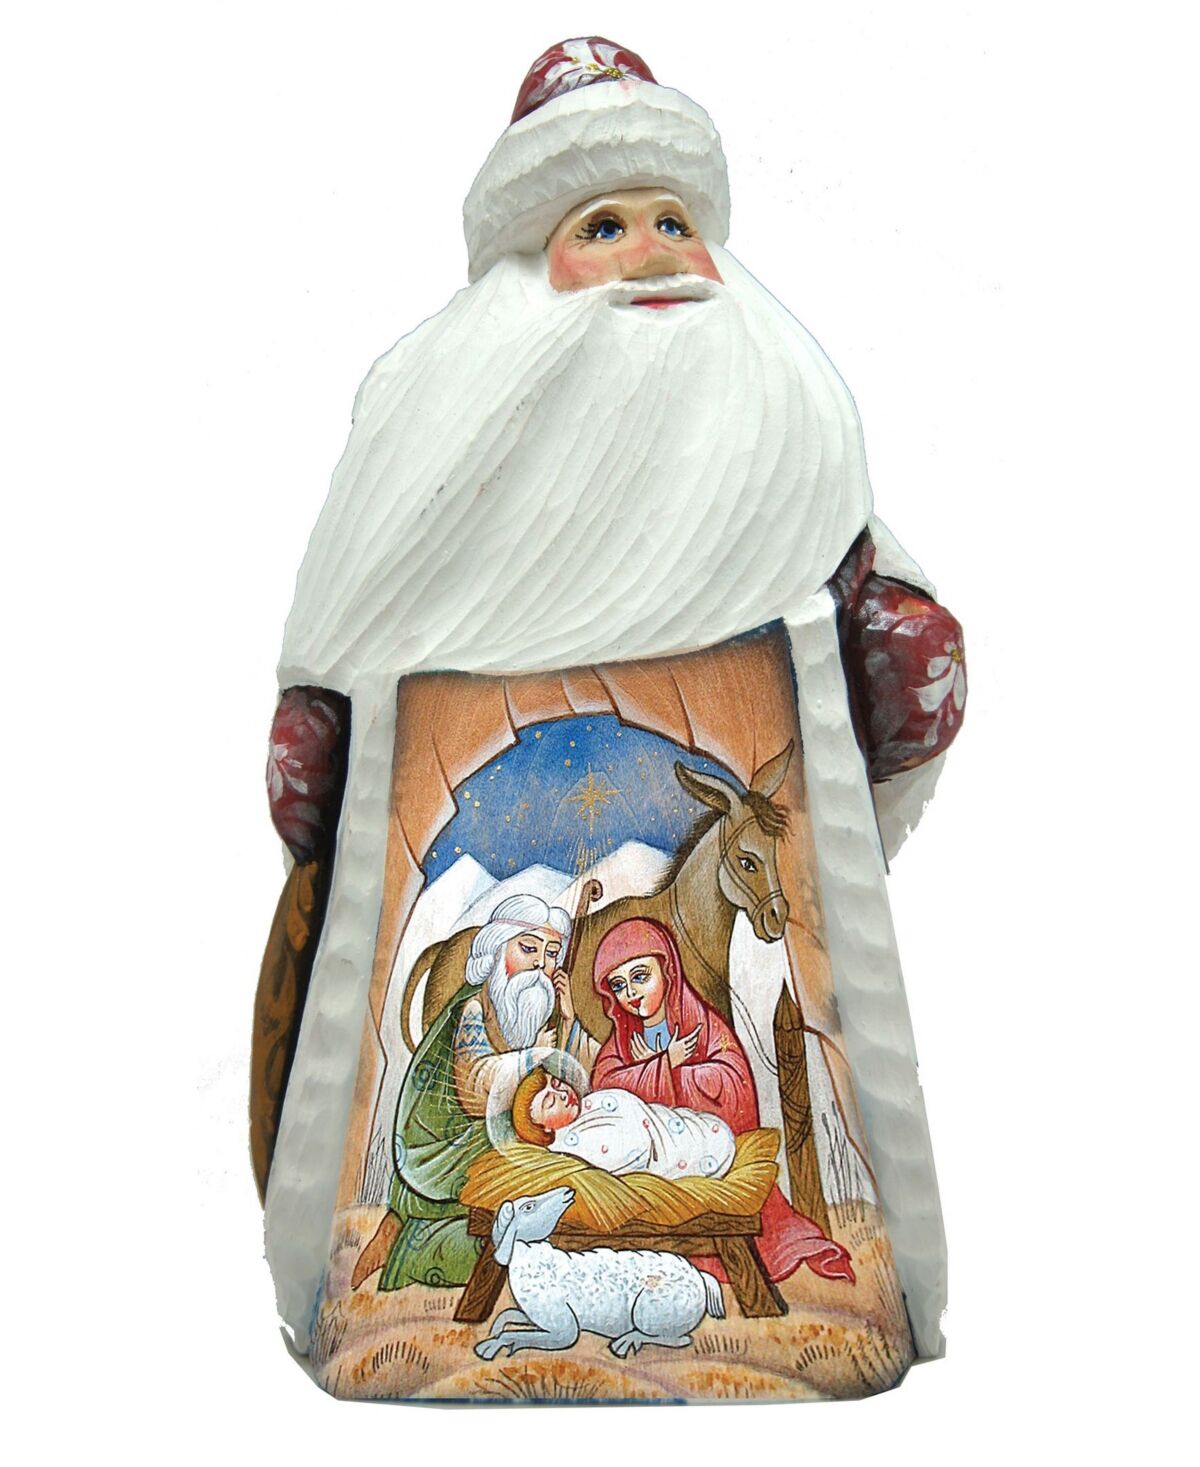 G.DeBrekht Woodcarved and Hand Painted Santa Nativity Figurine - Multi